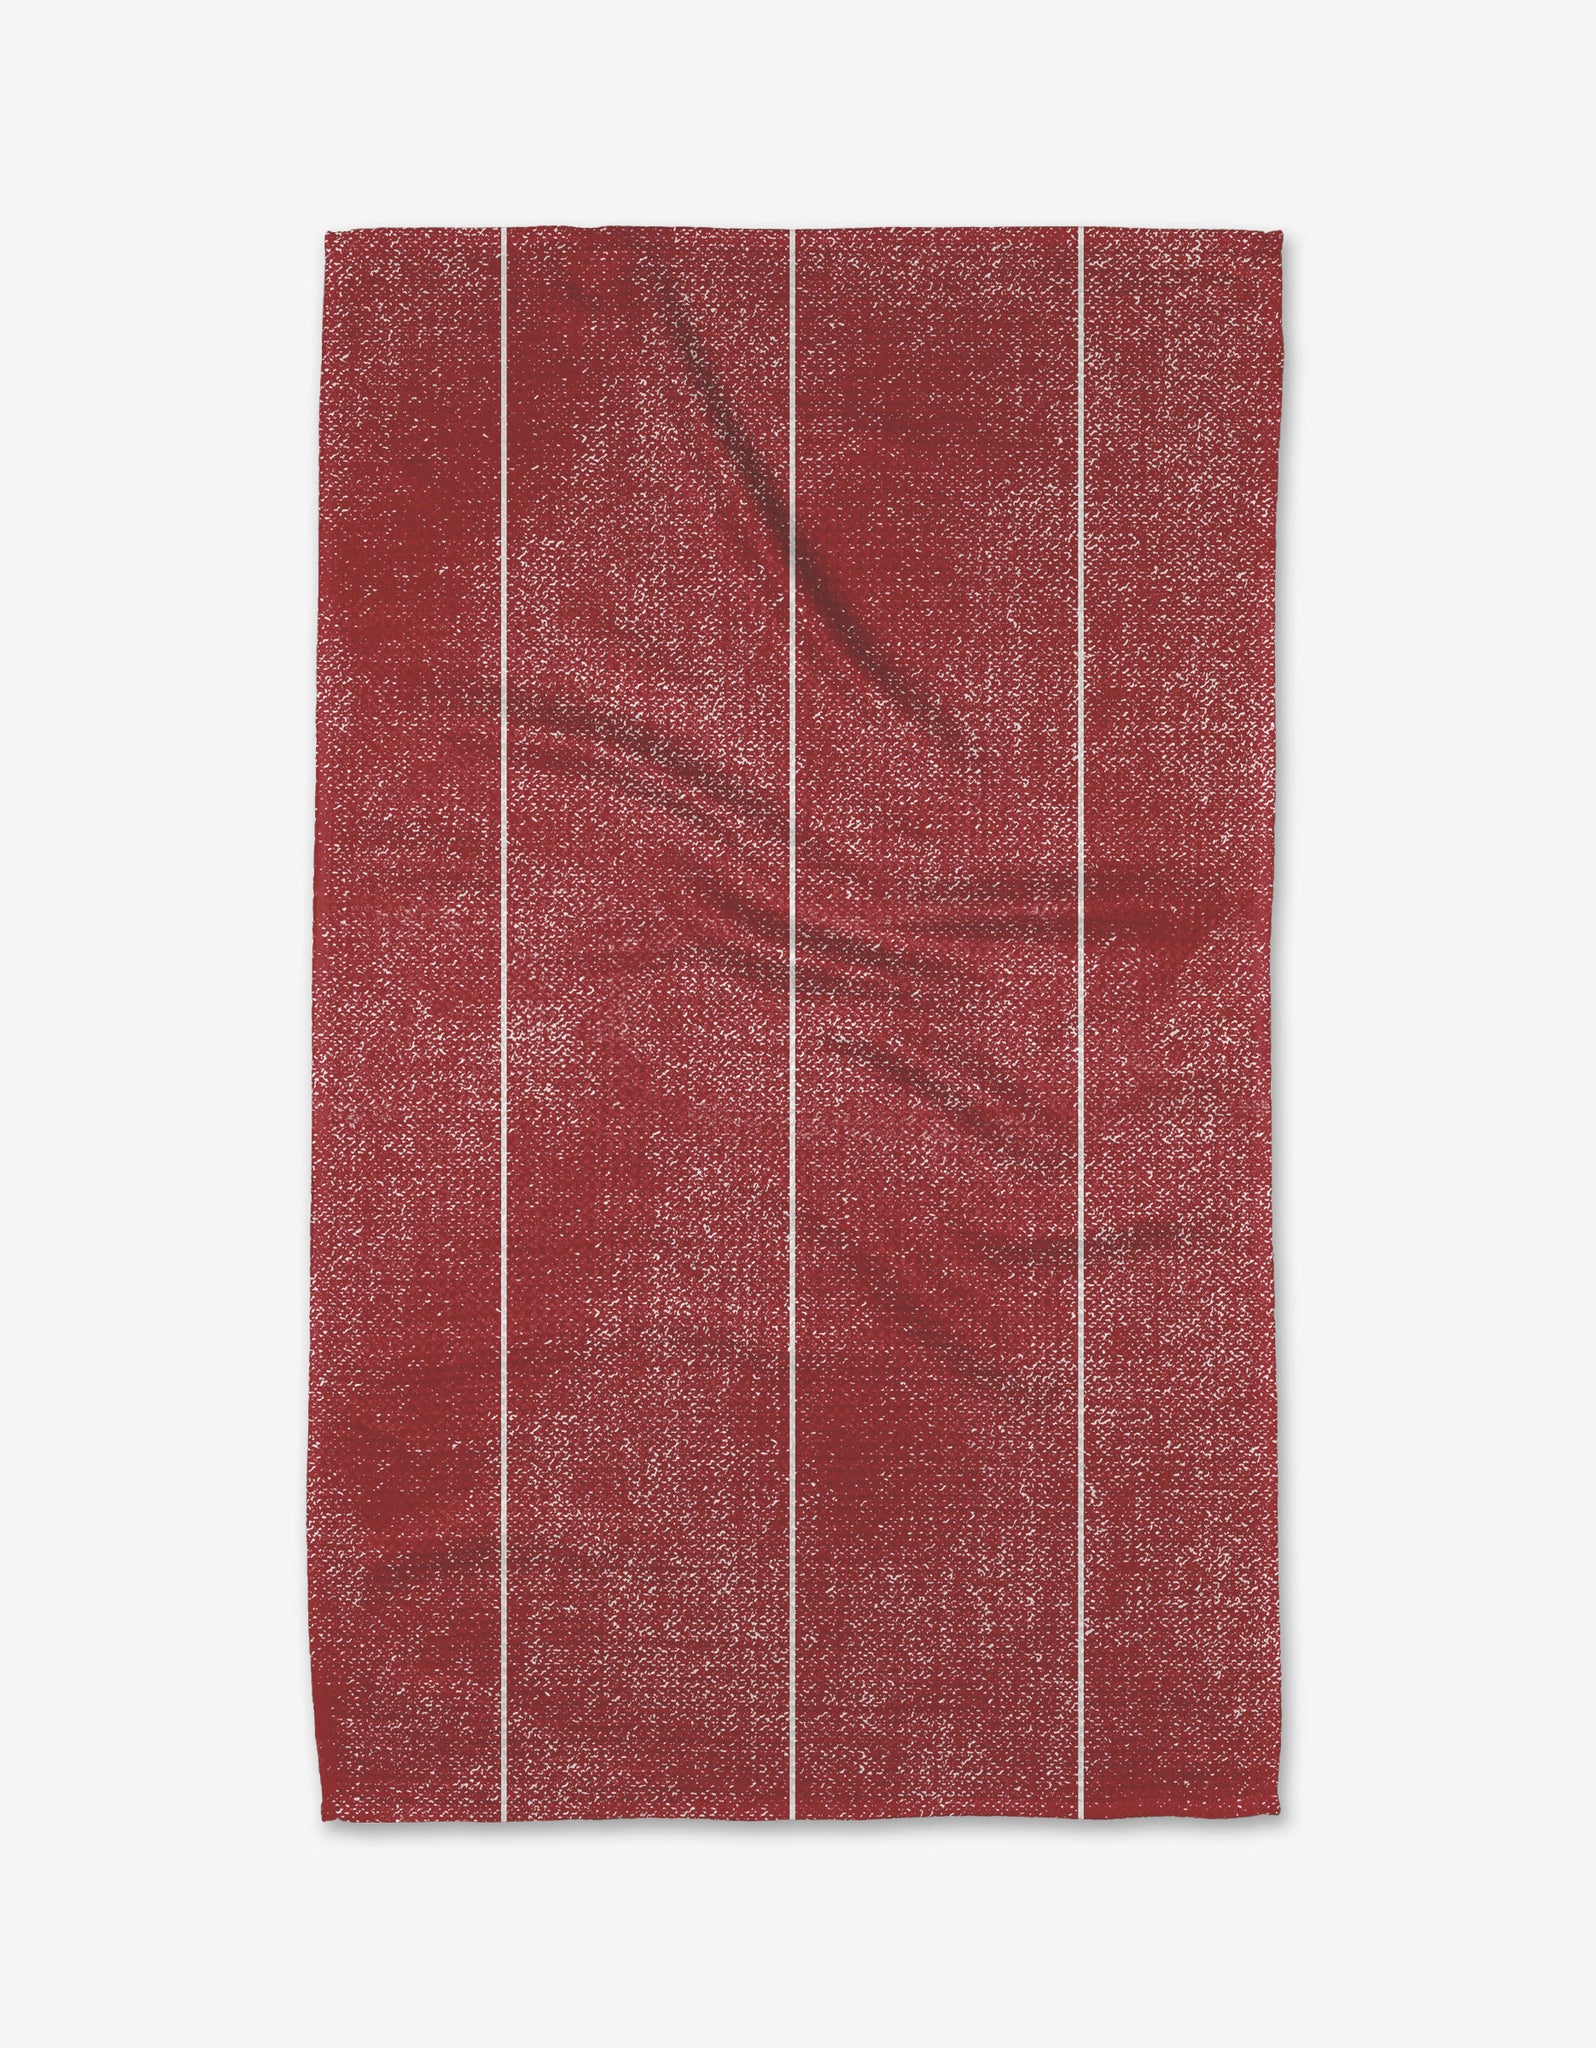 Introducing Becki Owens x Geometry Towel Collection - Becki Owens Blog